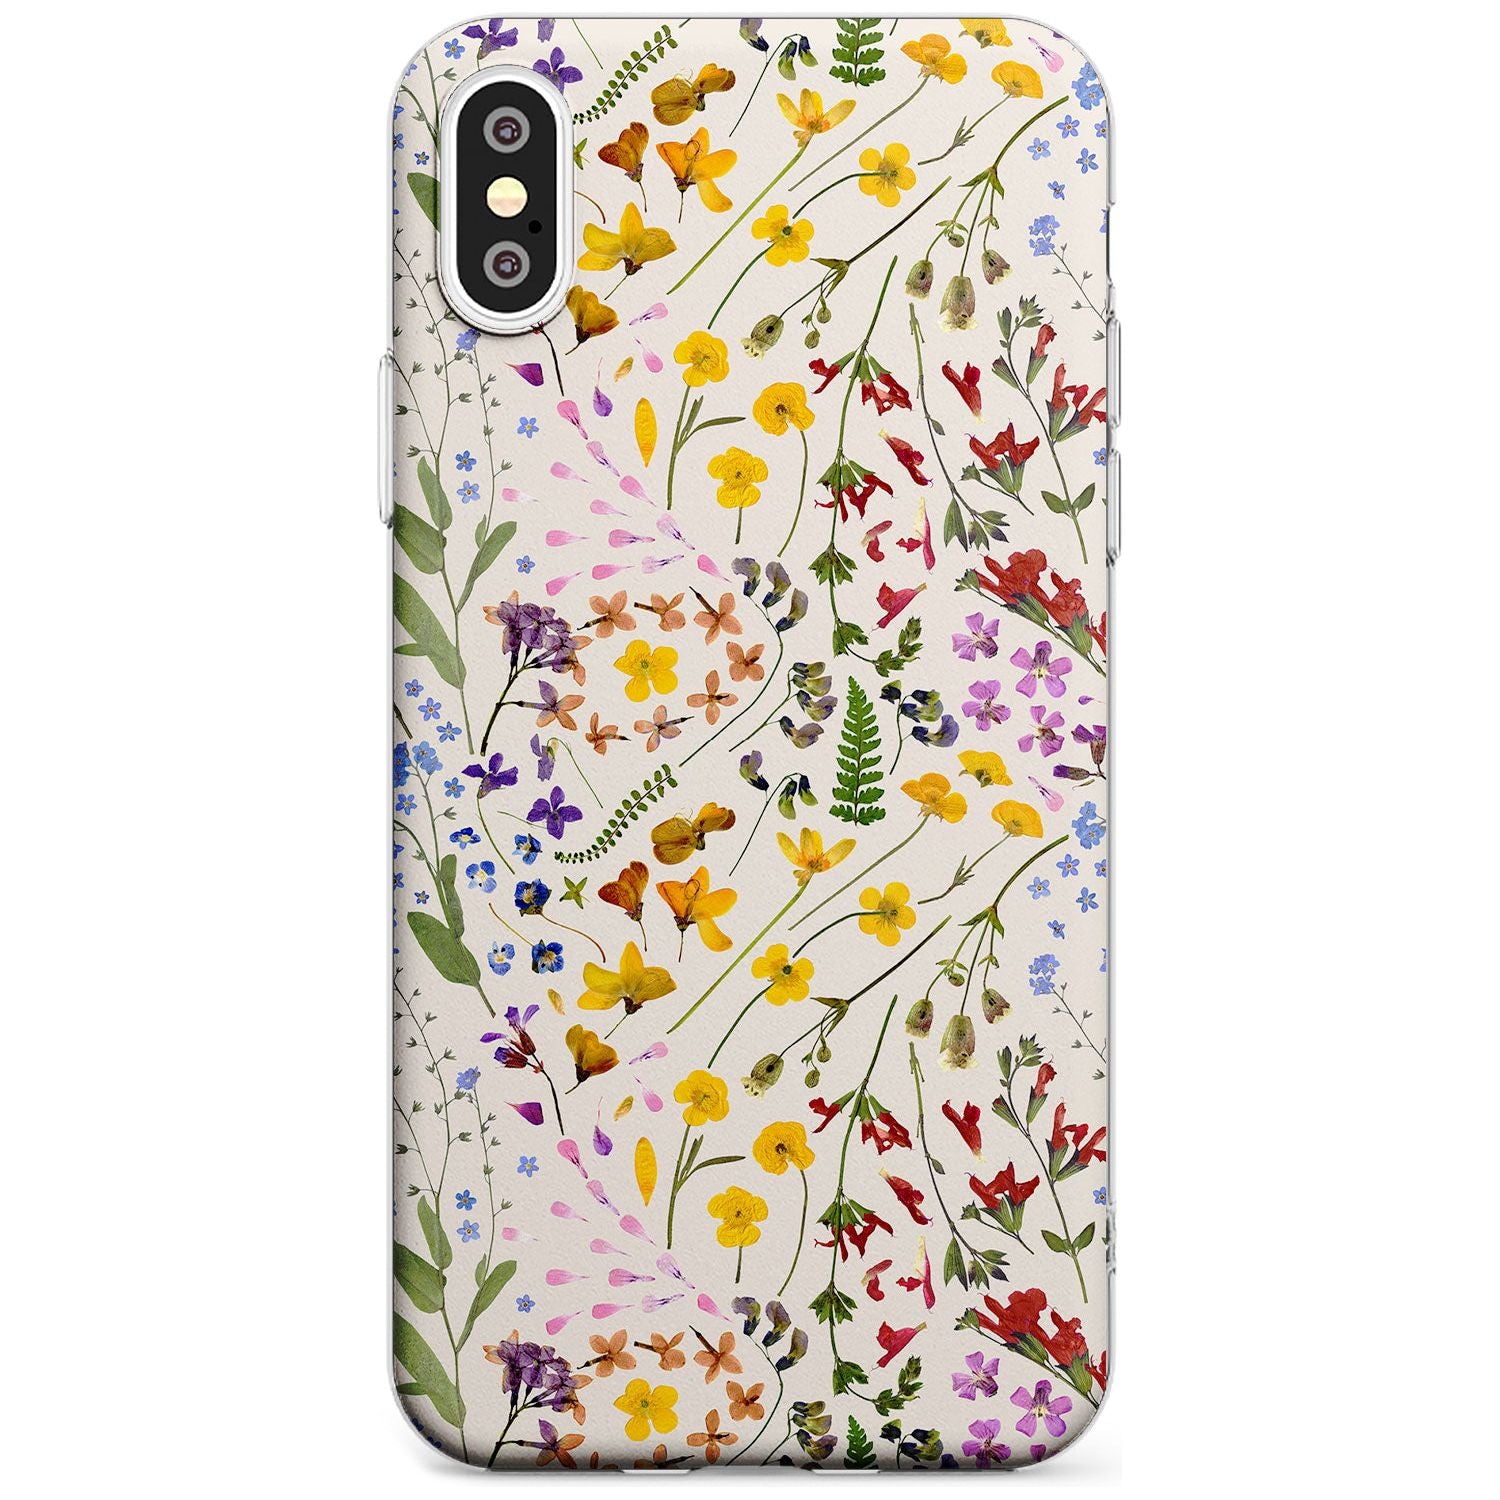 Wildflower & Leaves Cluster Design - Cream Slim TPU Phone Case Warehouse X XS Max XR